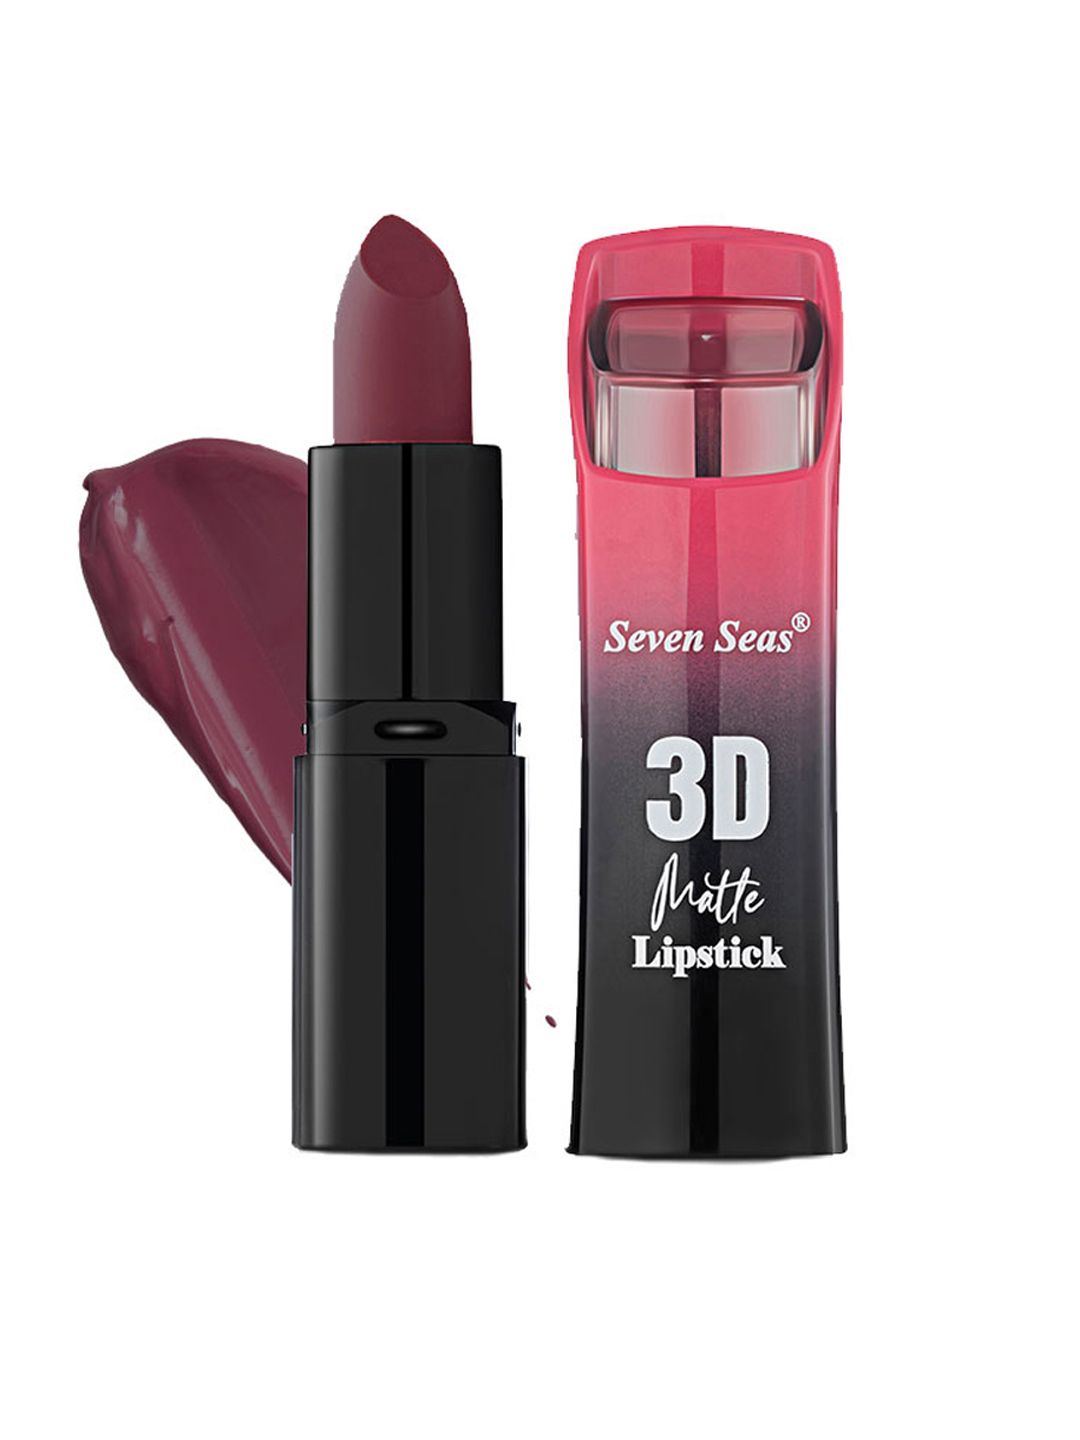 Seven Seas Full Coverage 3D Matte Lipstick, 3.8g - Chestnut Rose 2 Price in India